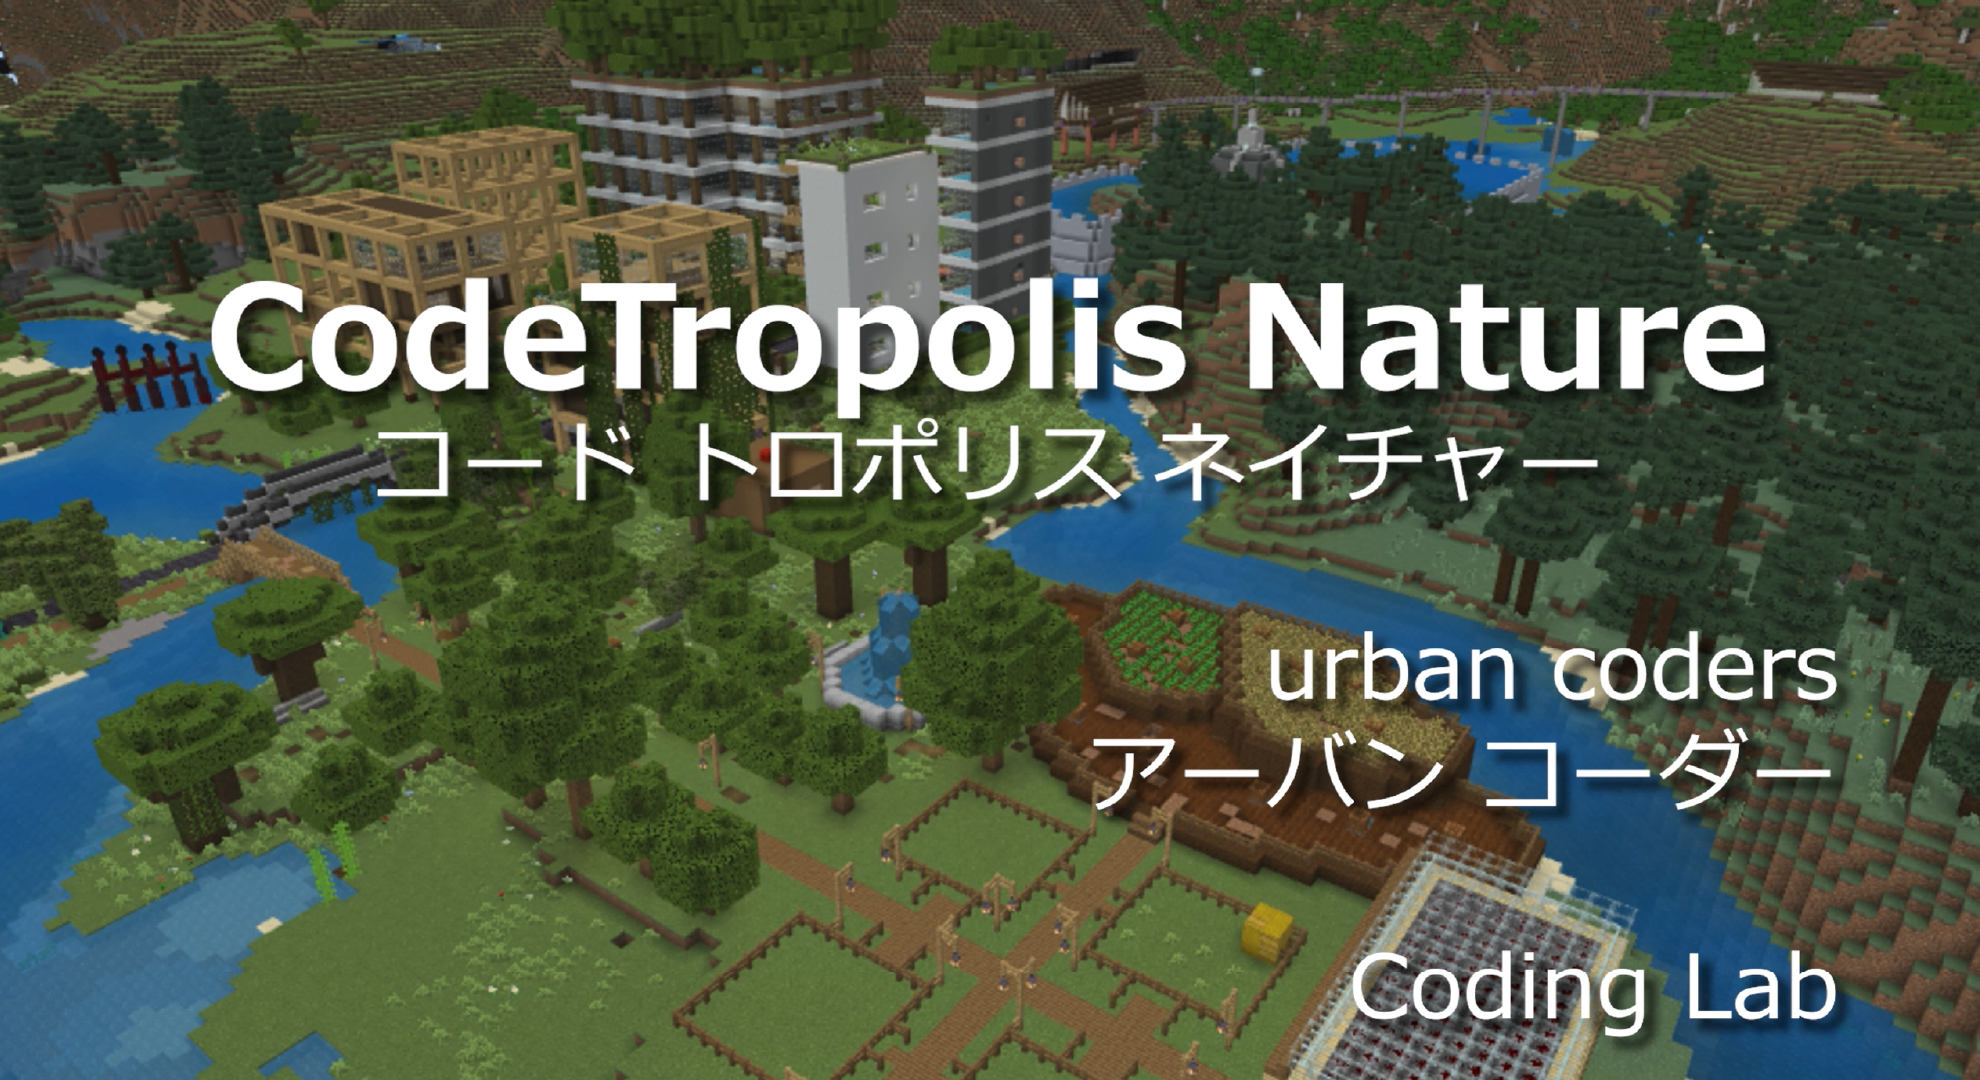 CodeTropolis Nature